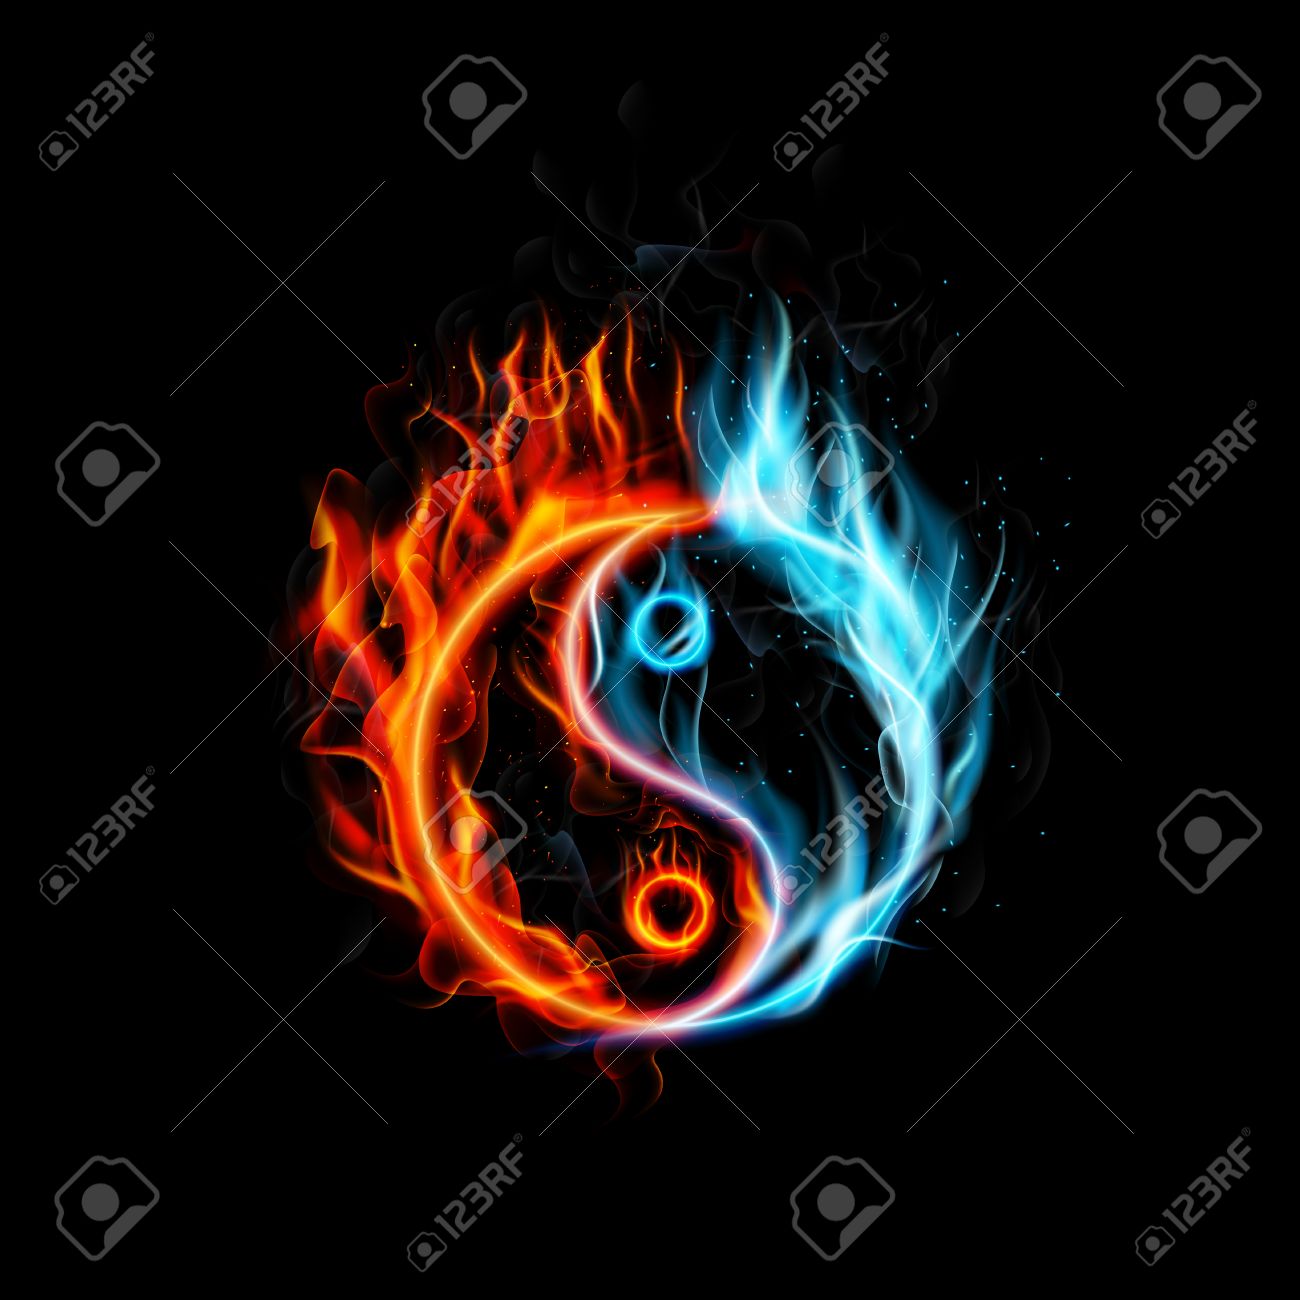 Illustration Of Fire Burning Yin Yang With Black Background